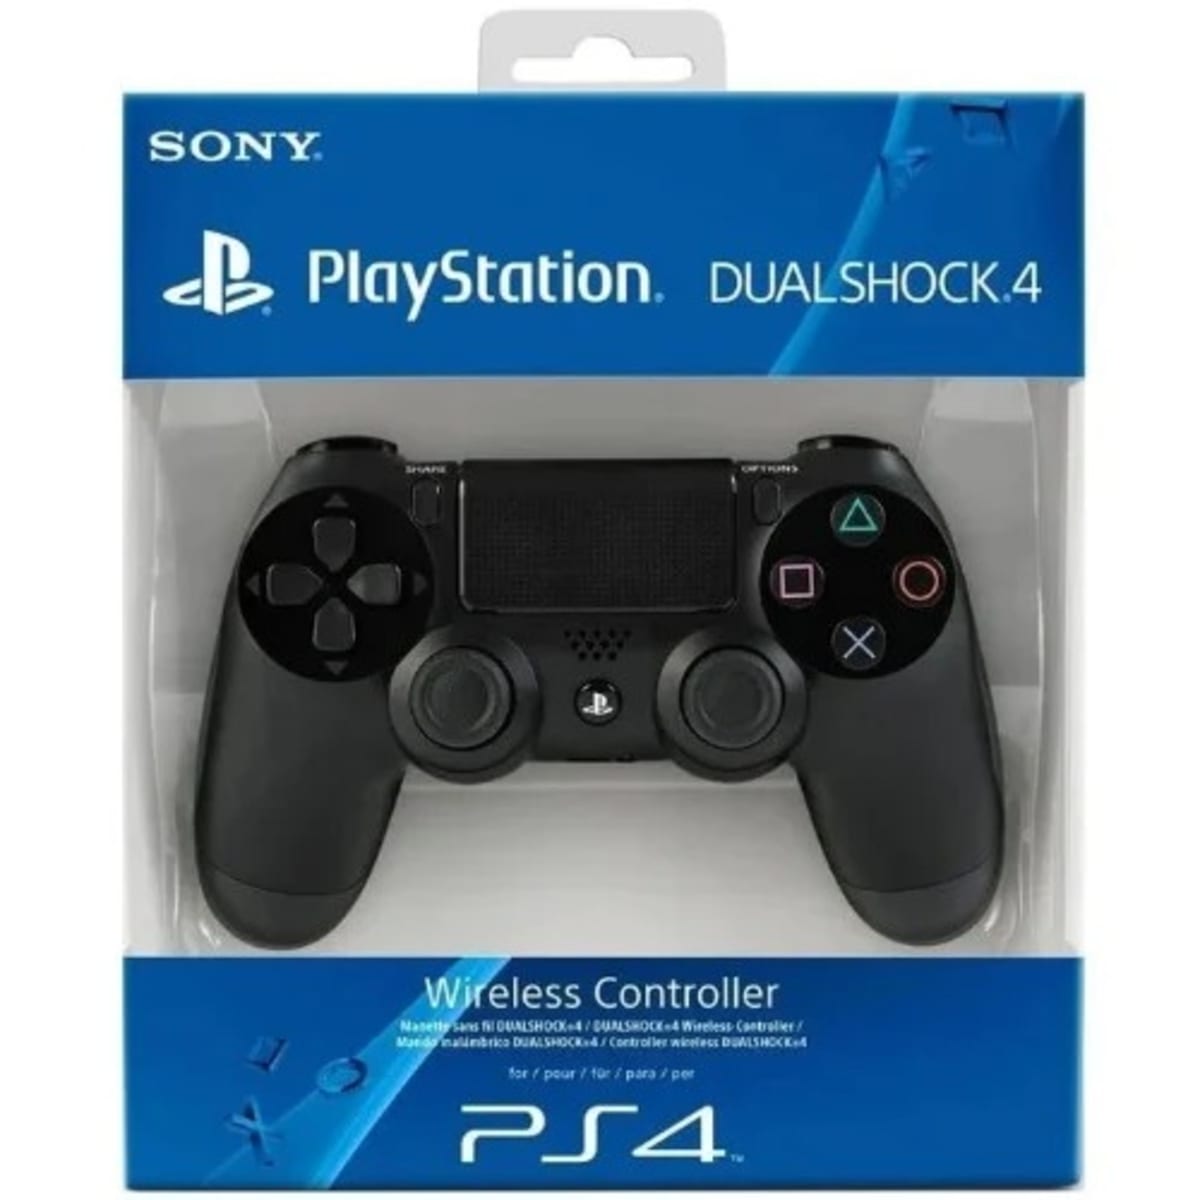 Sony PlayStation 4 Ps4 DualShock 4 Wireless Controller – Black